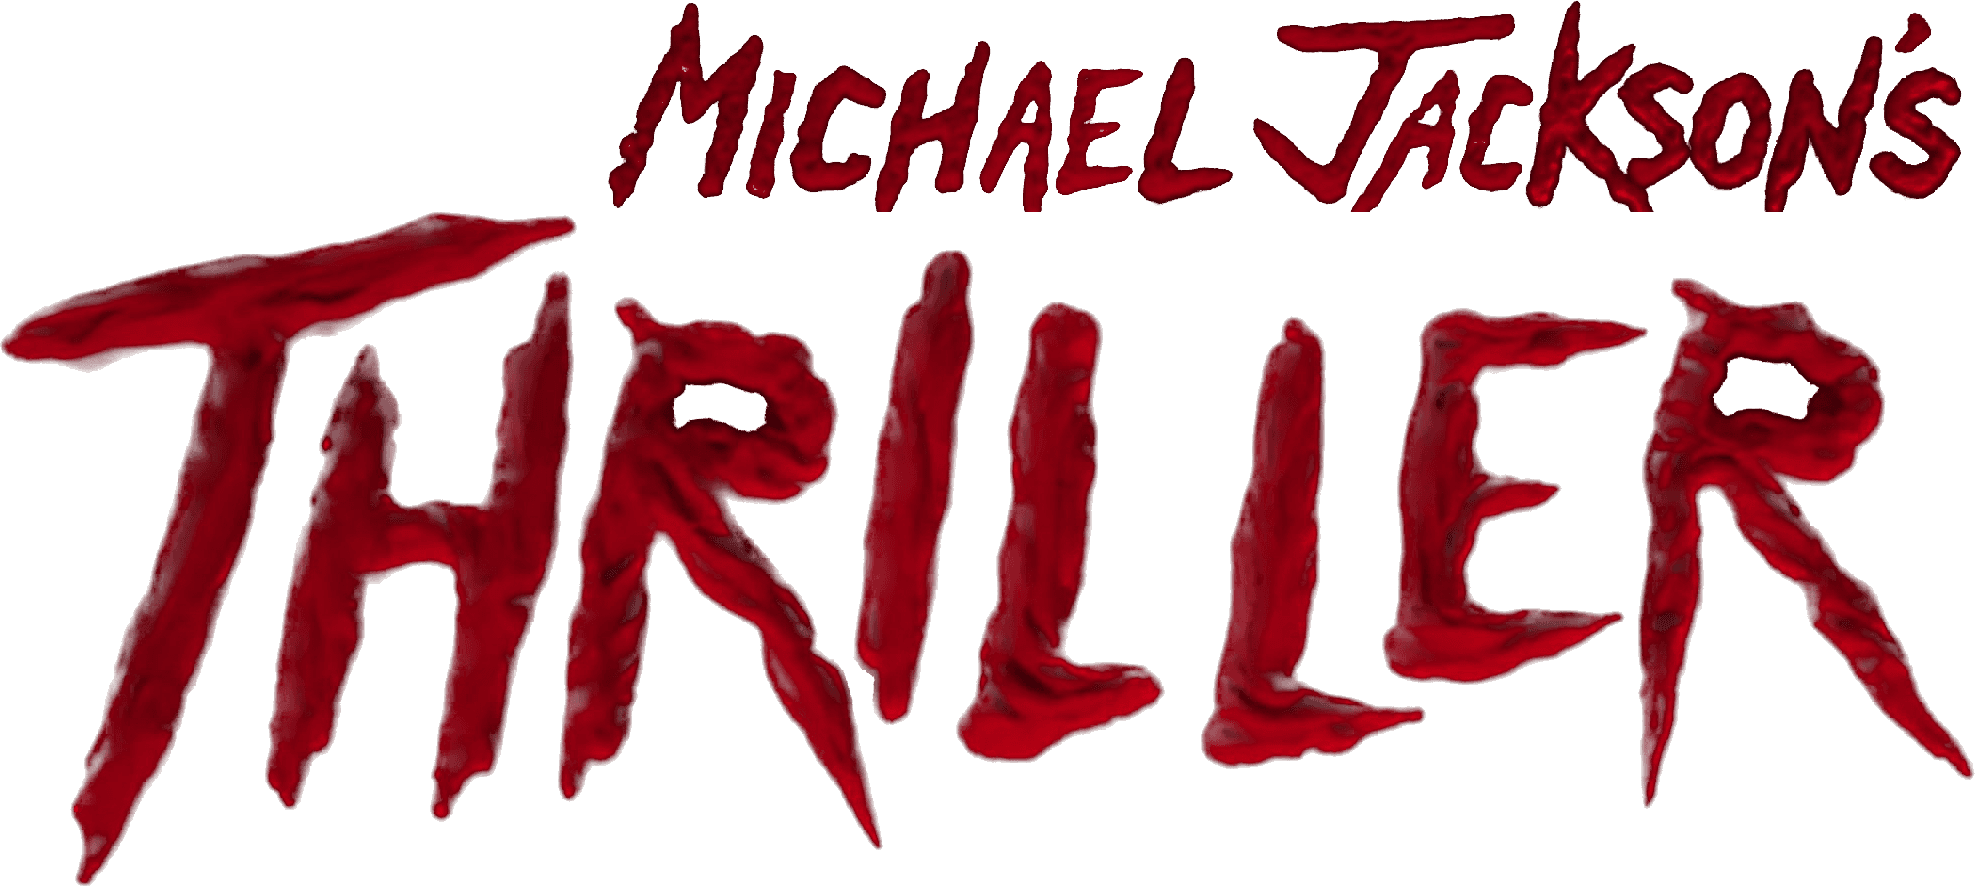 Michael Jackson's Thriller logo